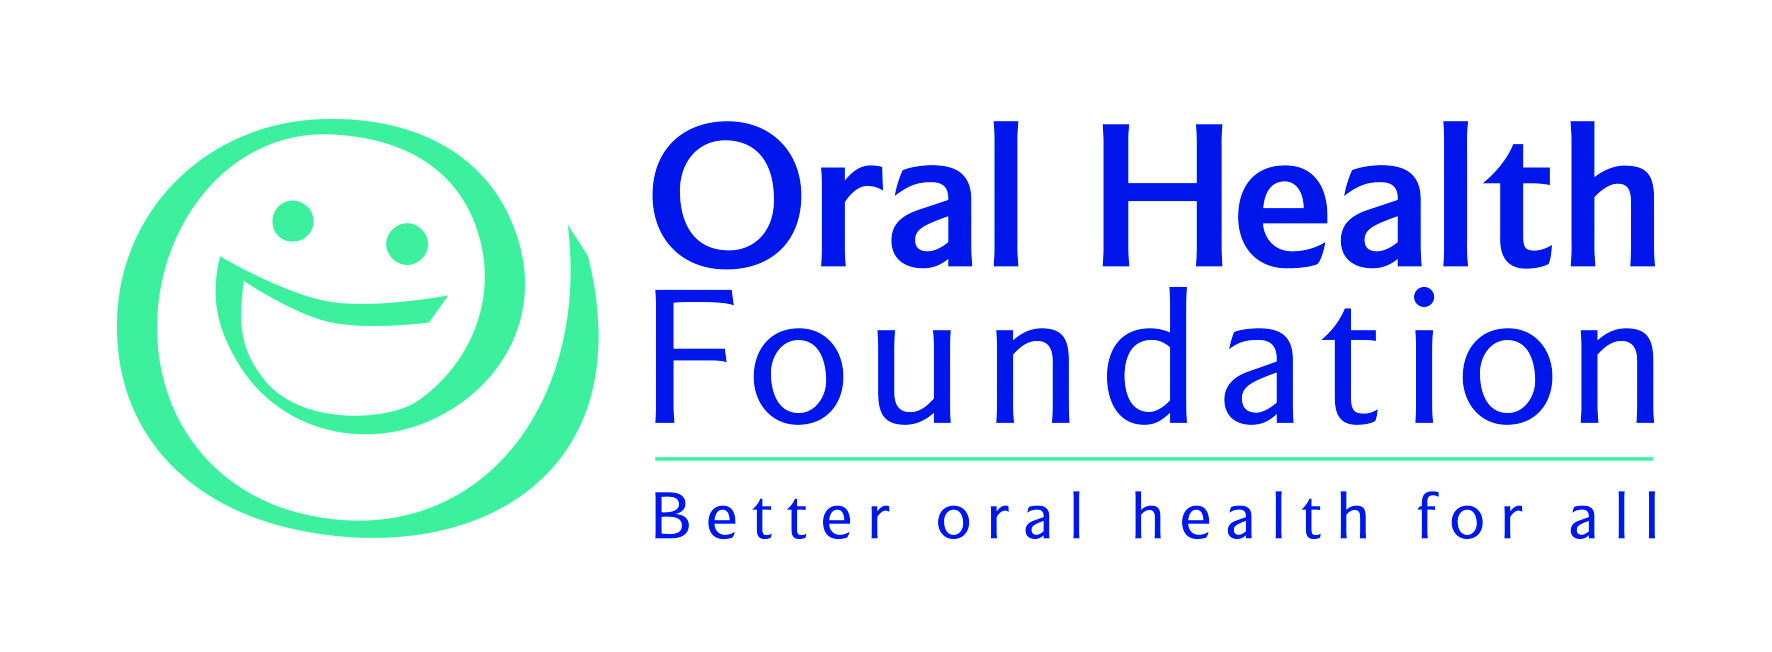 Oral Health Foundation UK - United Kingdom